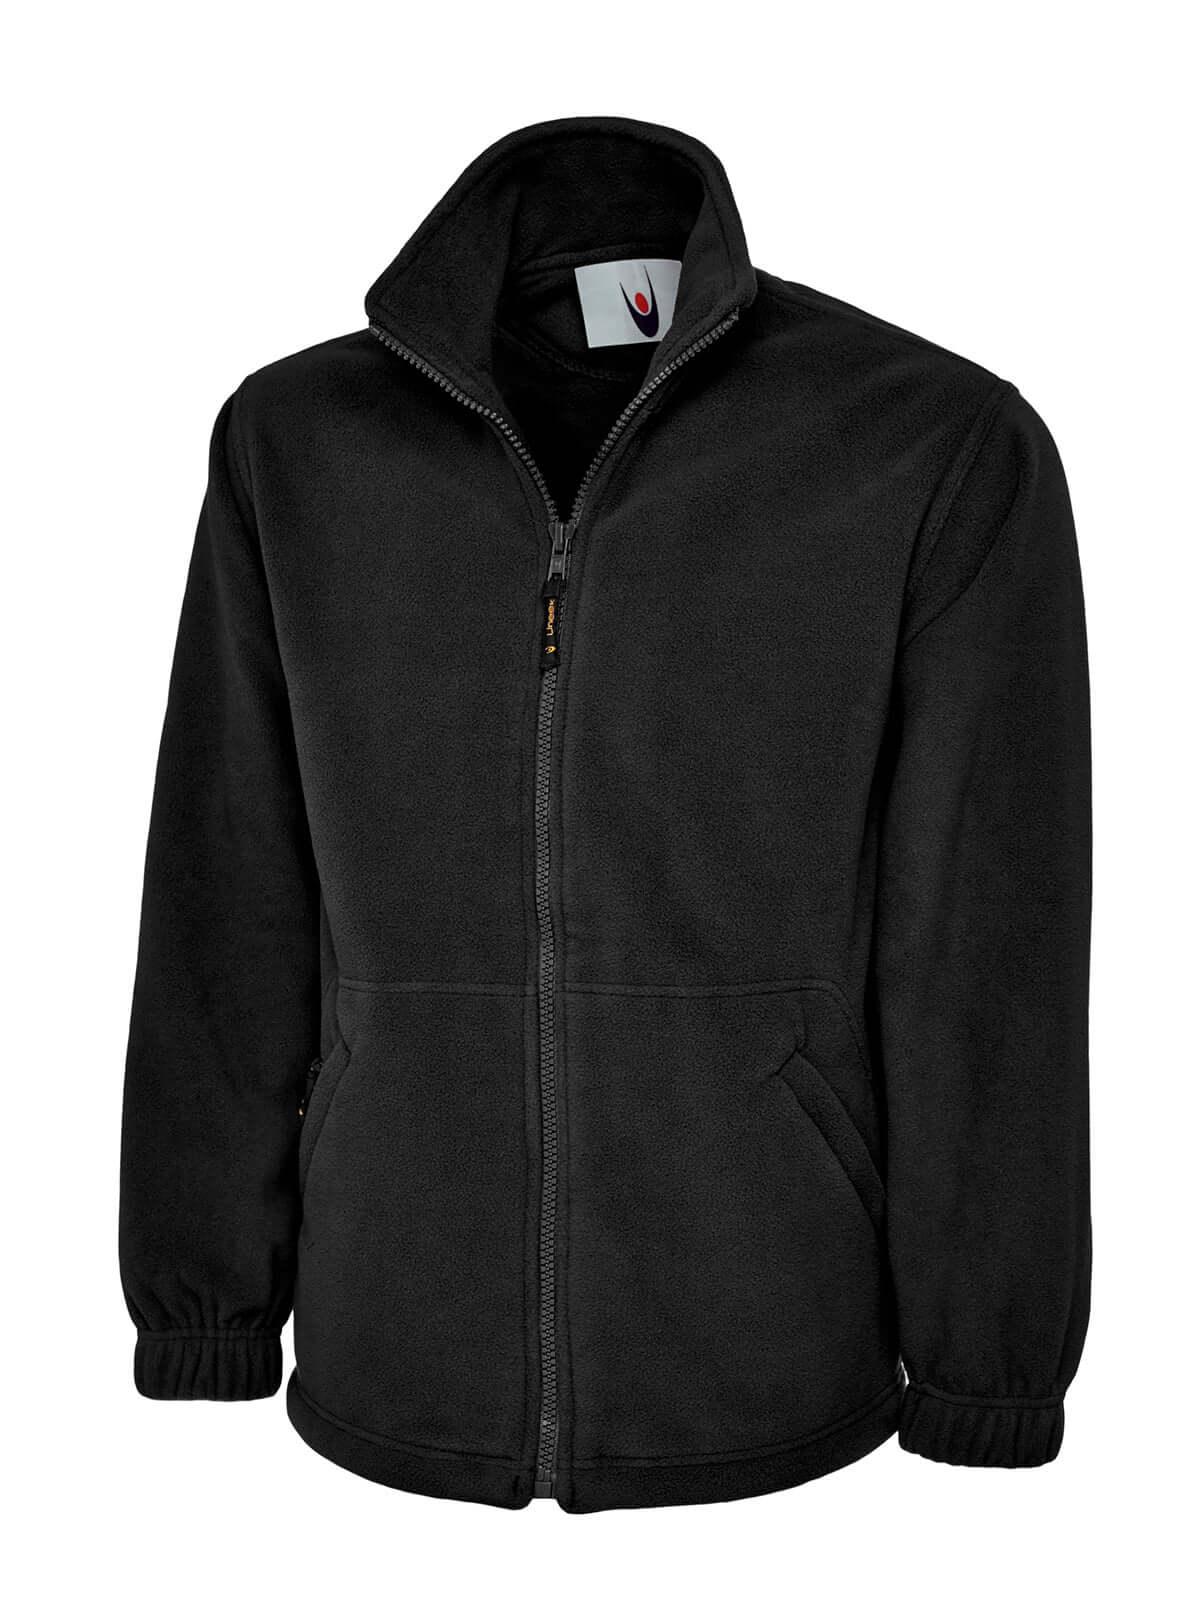 Pegasus Uniform Premium Full Zip Micro Fleece Jacket - Black